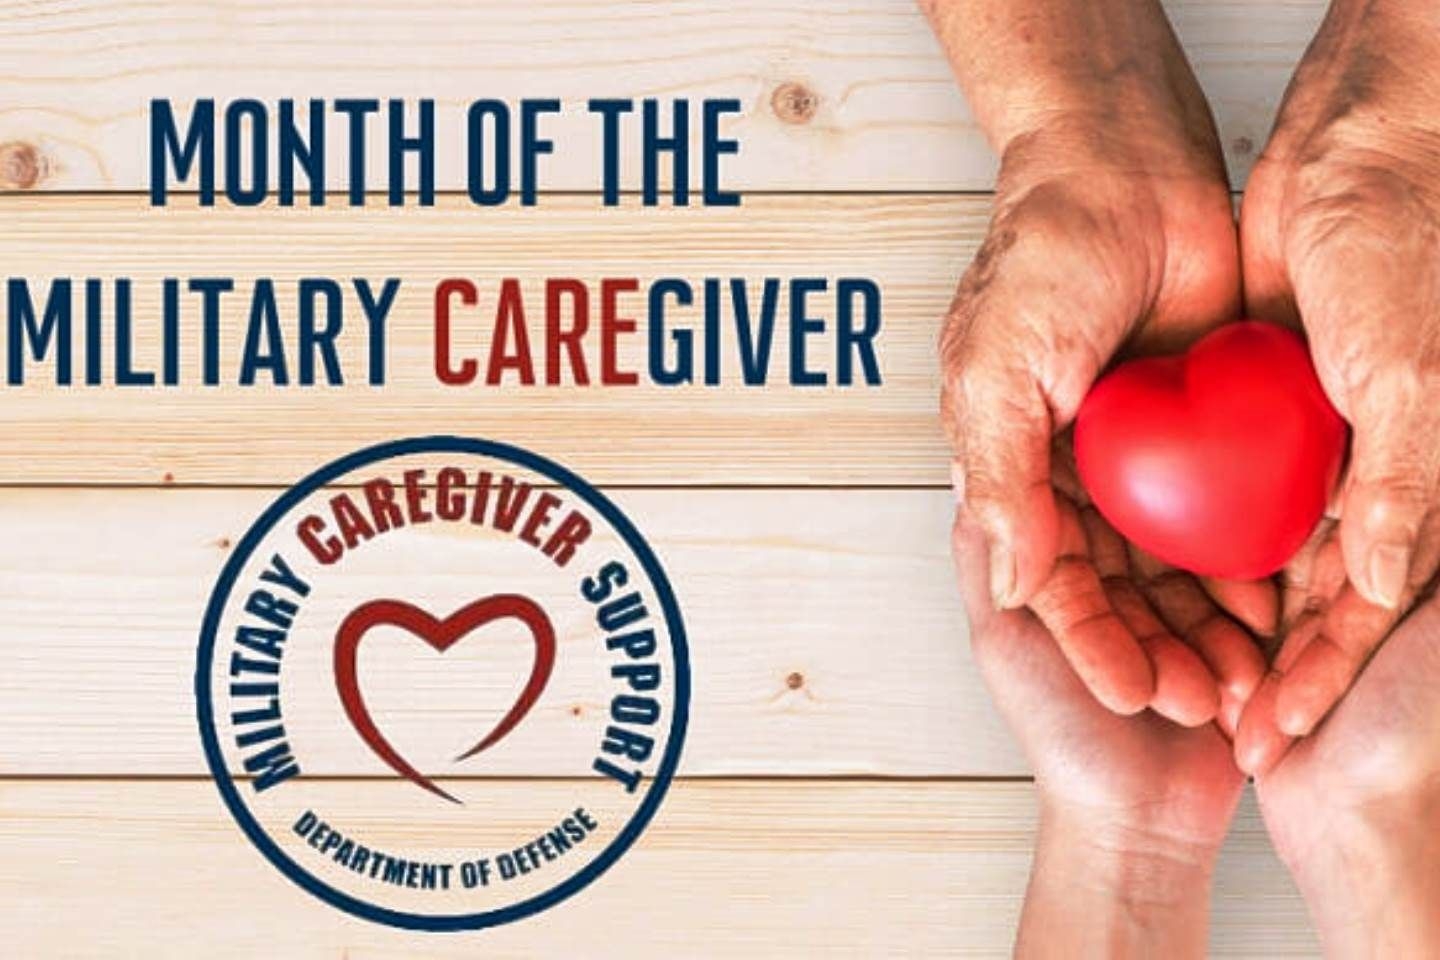 https://veteran.com/military-caregiver-month/